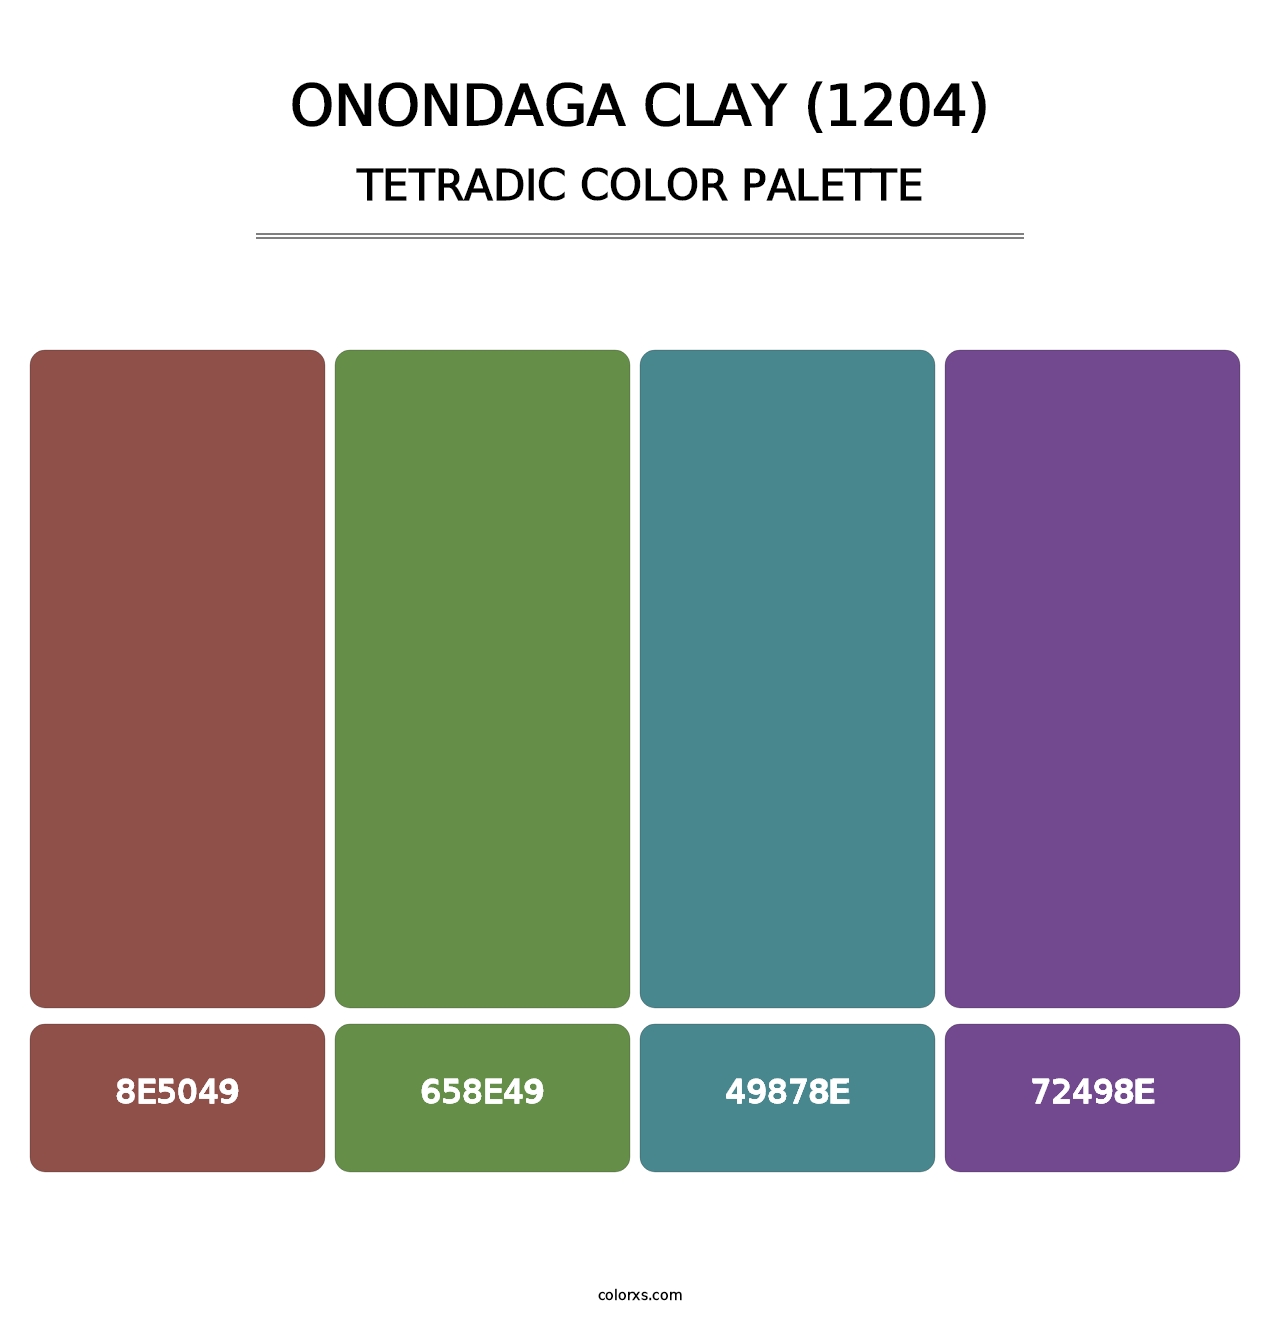 Onondaga Clay (1204) - Tetradic Color Palette